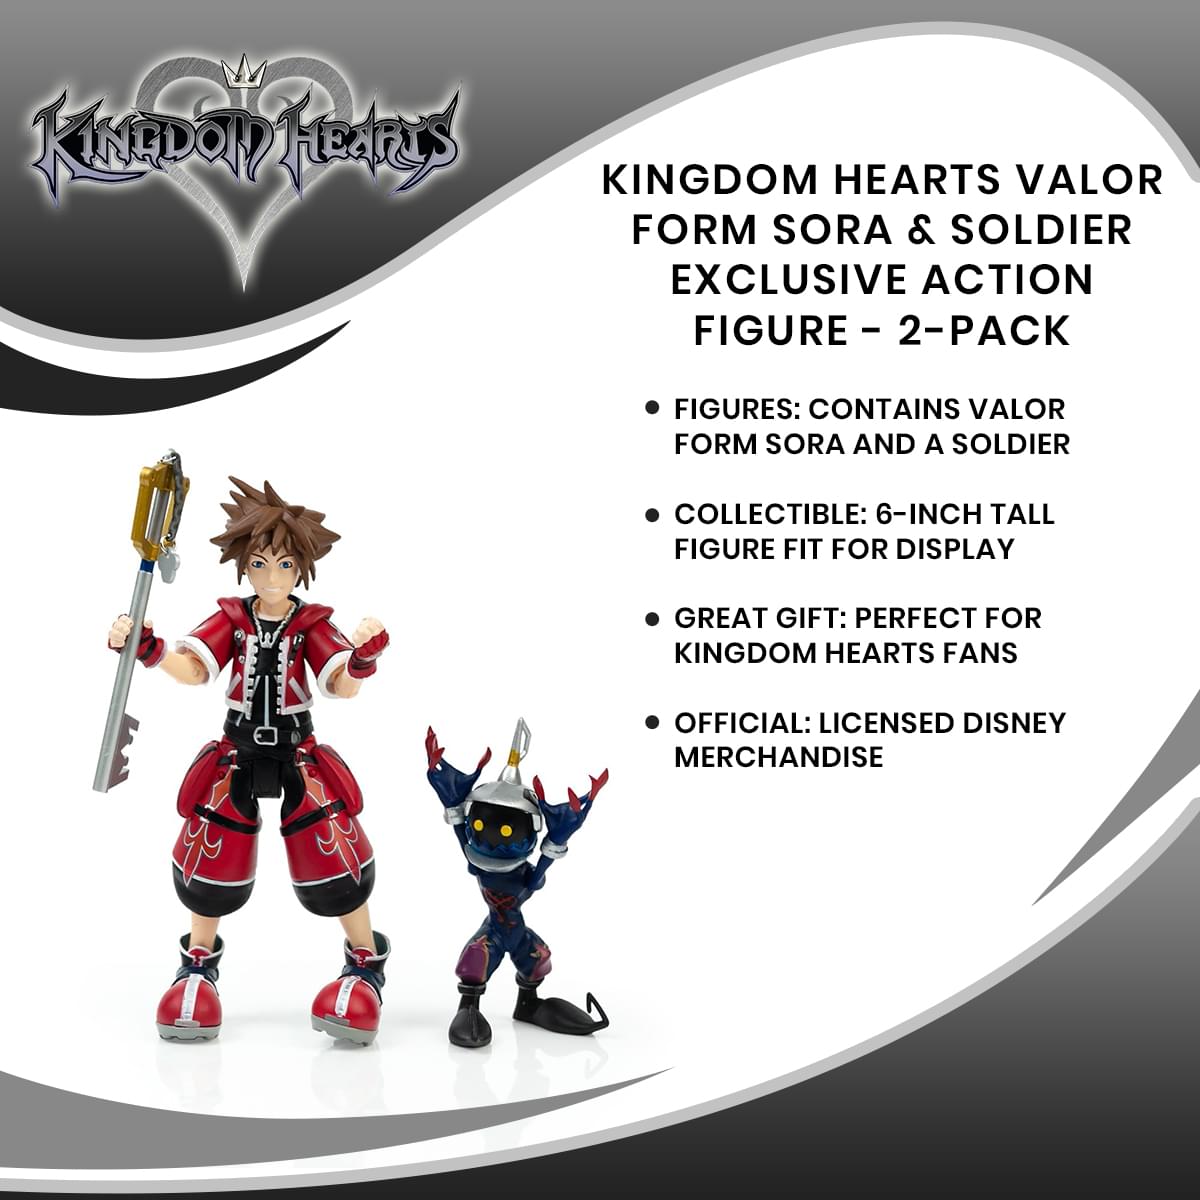 Kingdom Hearts Valor Form Sora & Soldier Exclusive Action Figure - 2-Pack